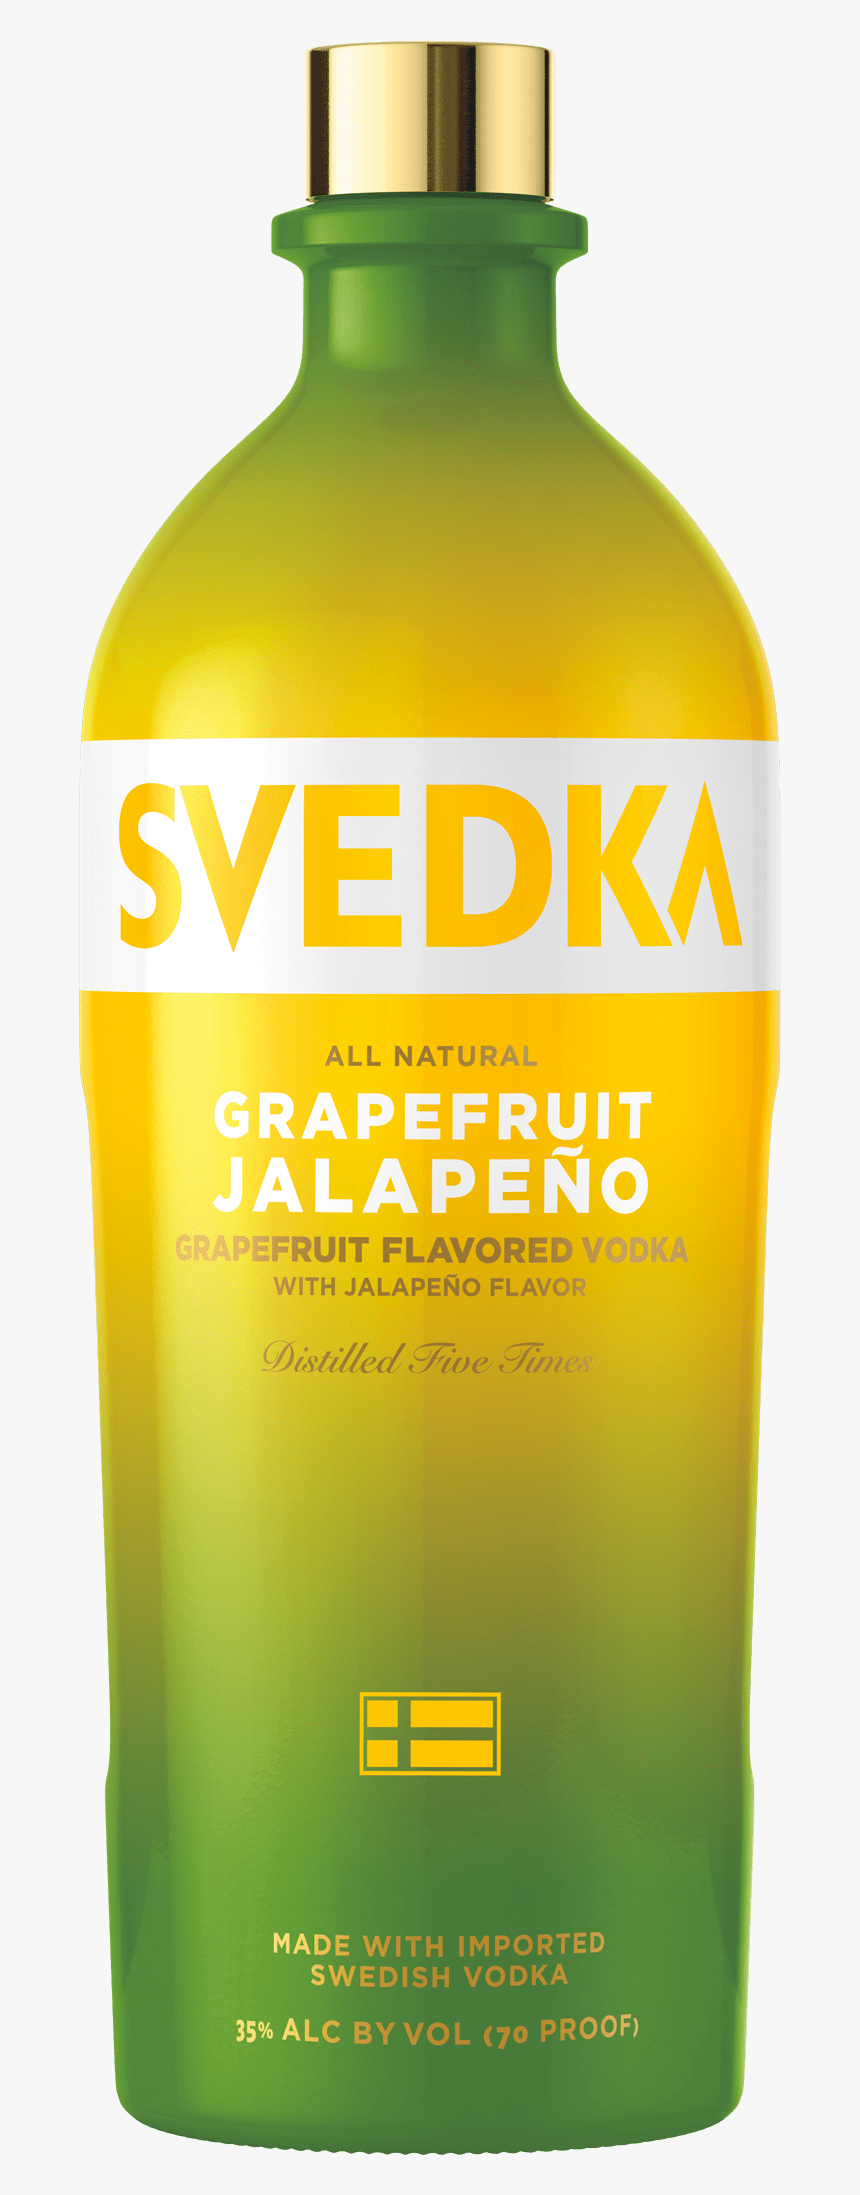 Svedka Grapefruitjalapeno Bottle - Svedka Grapefruit Jalapeno Vodka, HD Png Download, Free Download